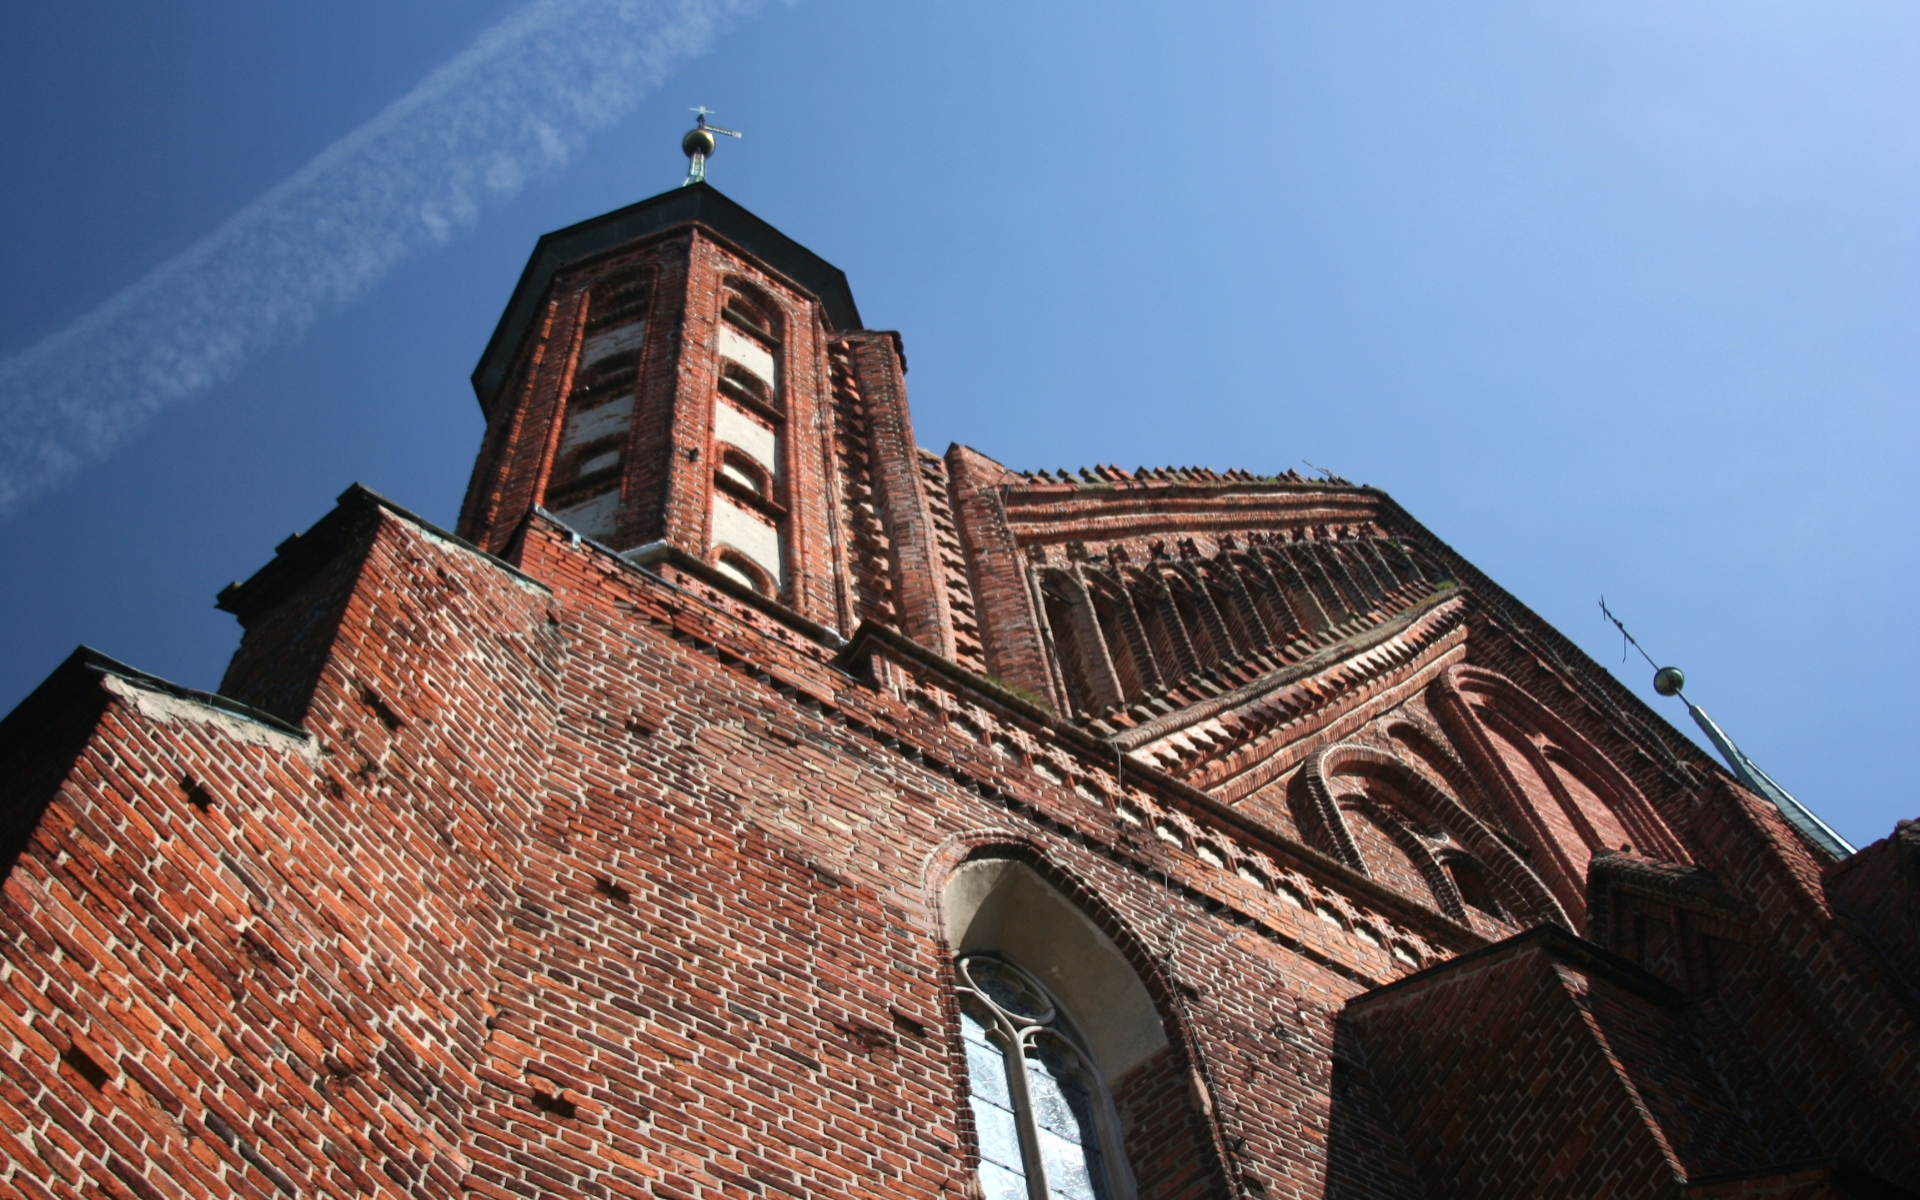 329710 descargar imagen religioso, catedral de frombork, catedrales: fondos de pantalla y protectores de pantalla gratis